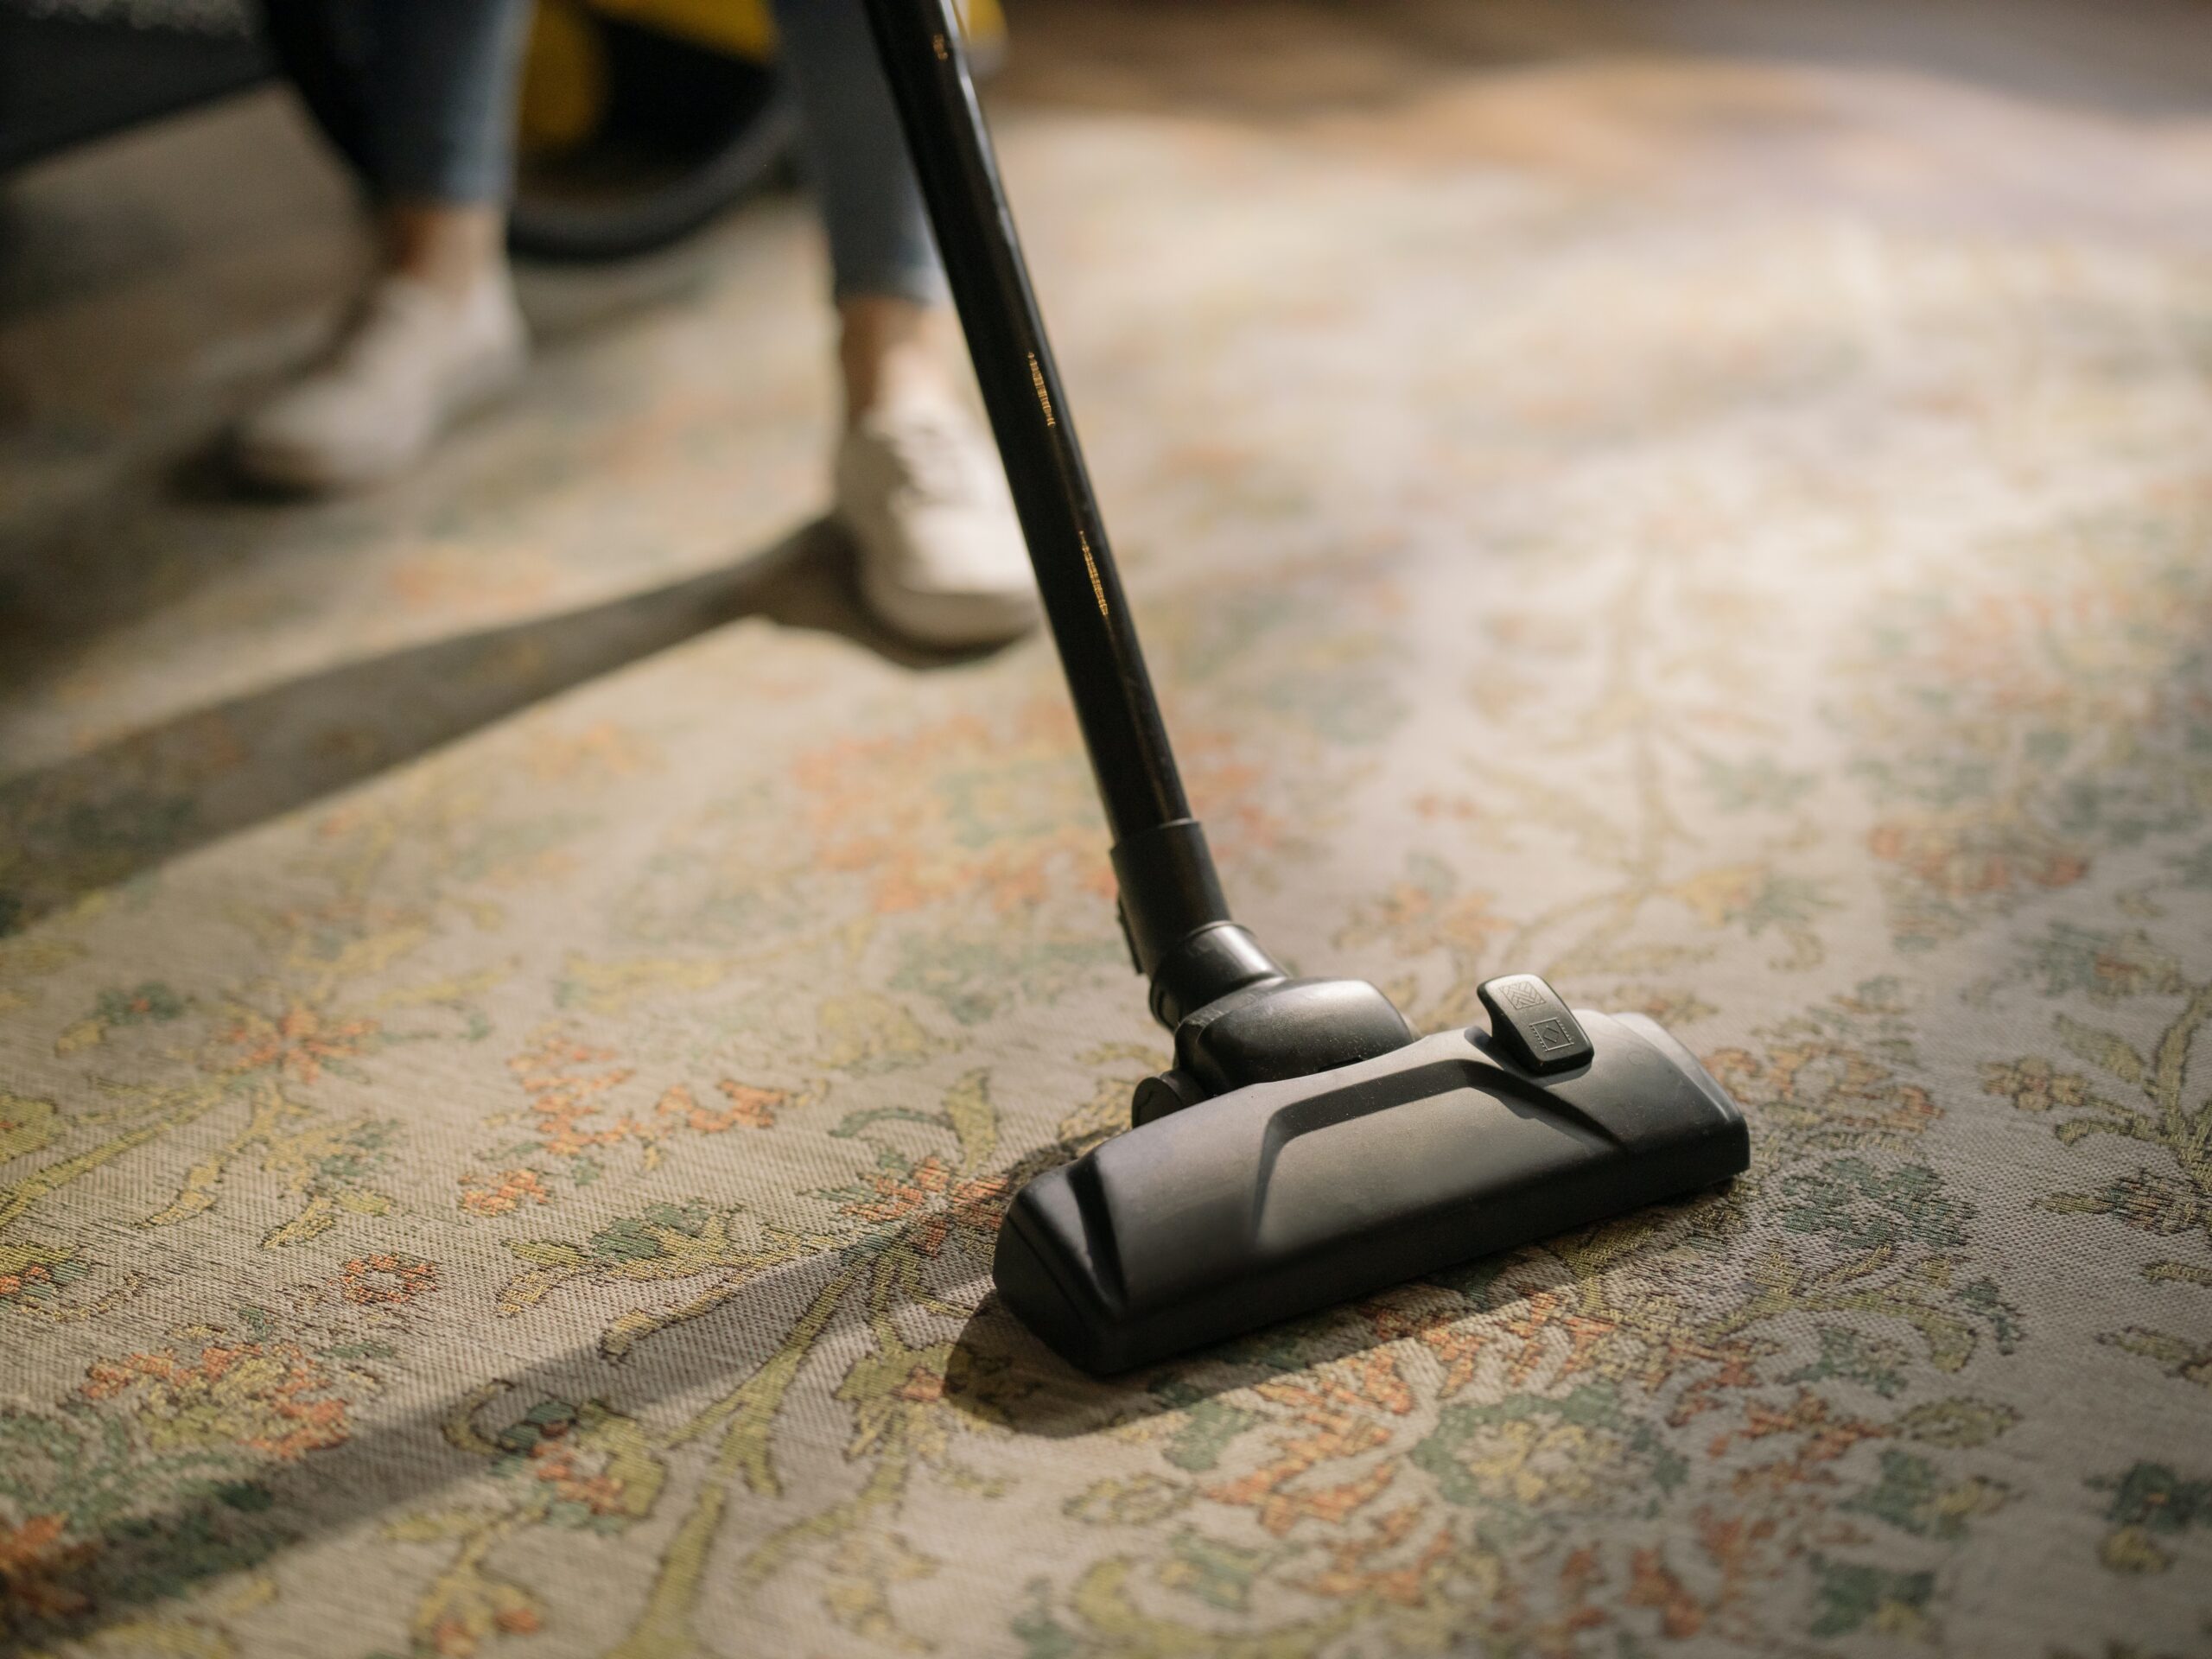 A person vacuuming carpet